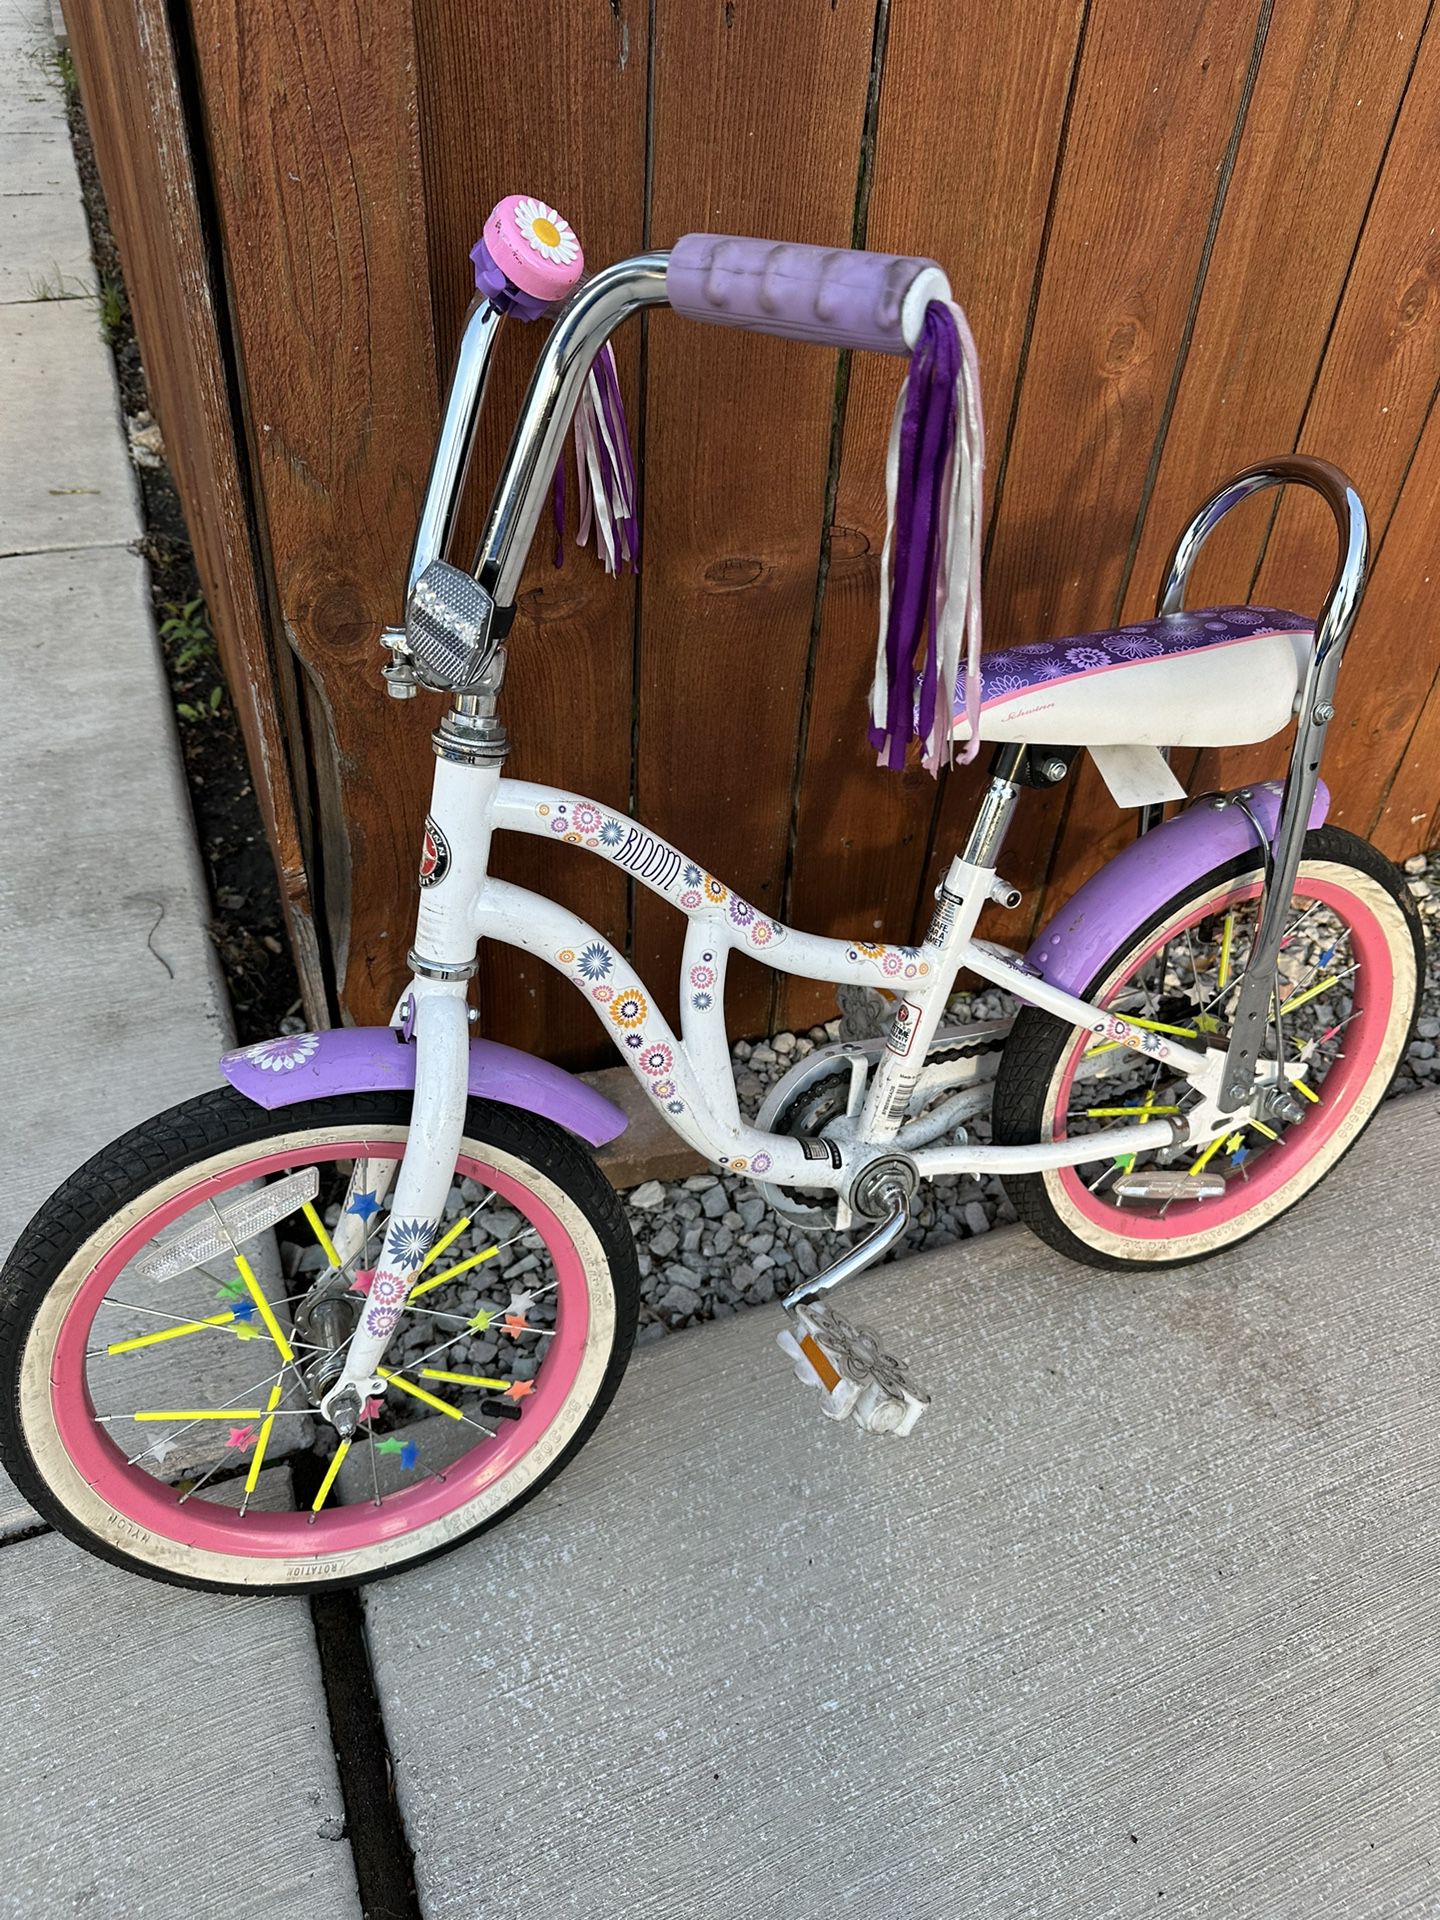 Little Girls Bike With Training Wheels $30